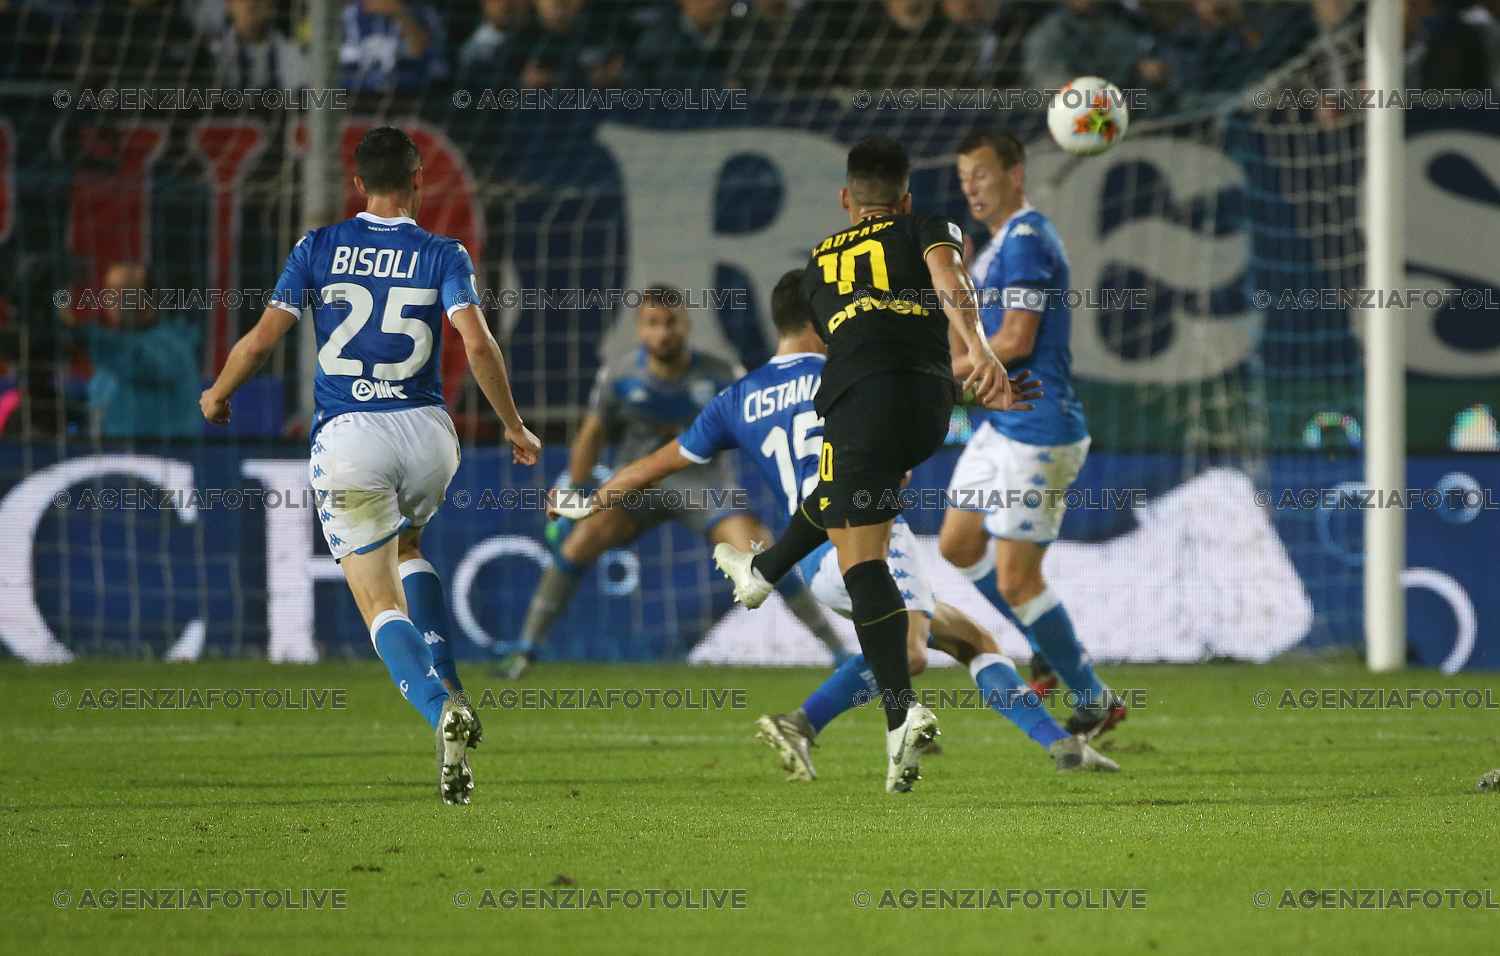 Brescia vs Inter Fotolive Filippo Venezia